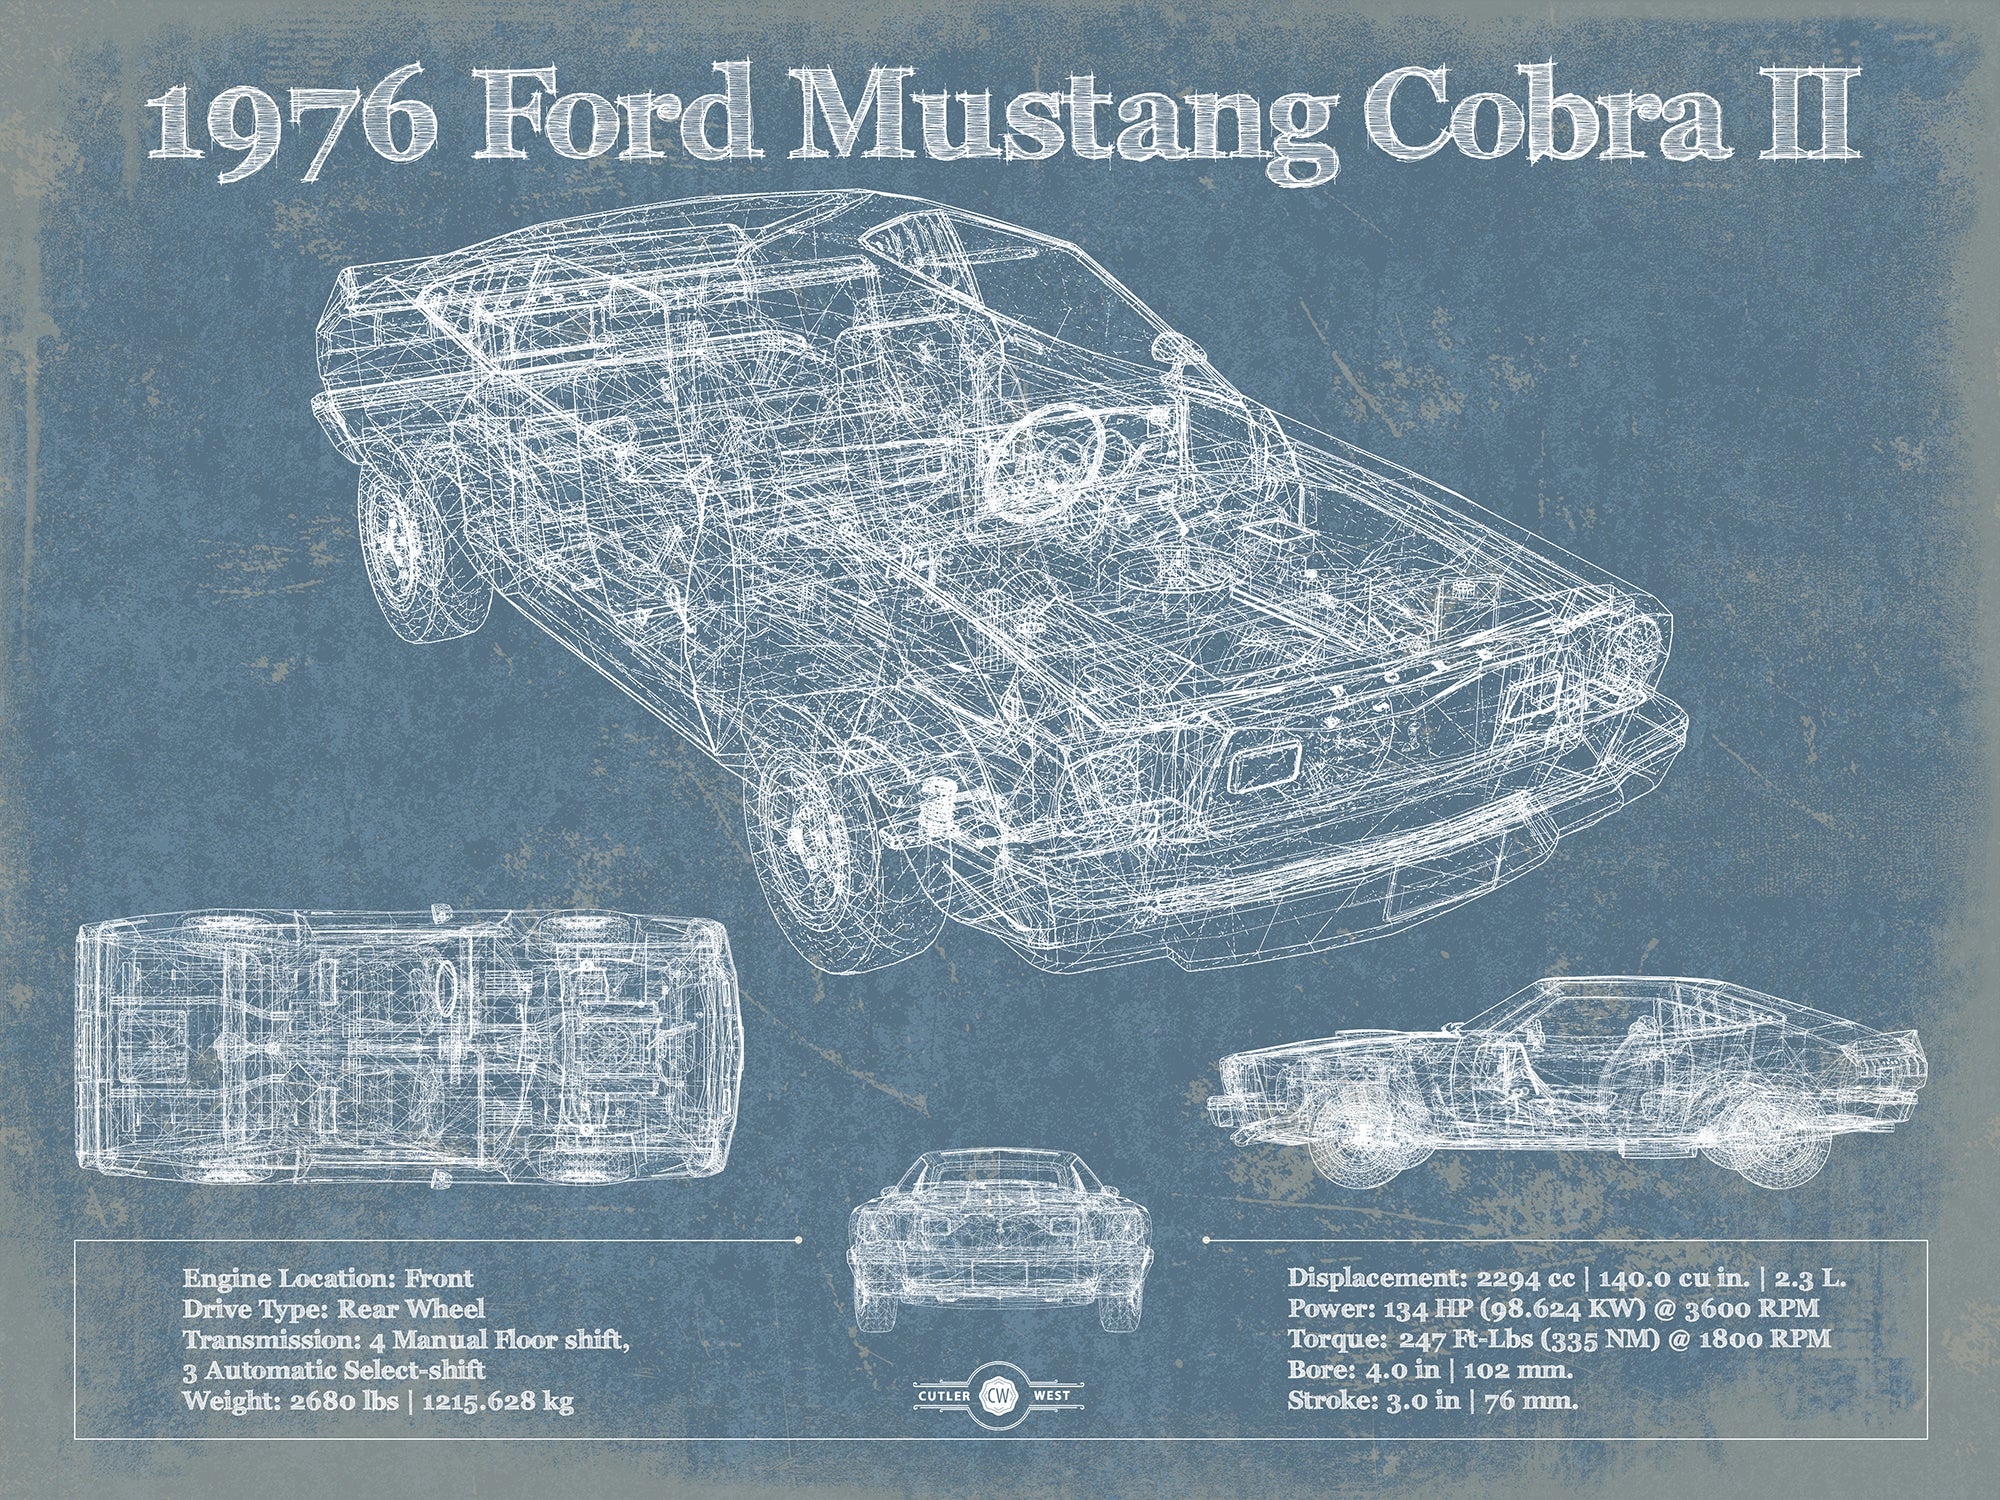 1976 Ford Mustang Cobra II Blueprint Vintage Auto Print